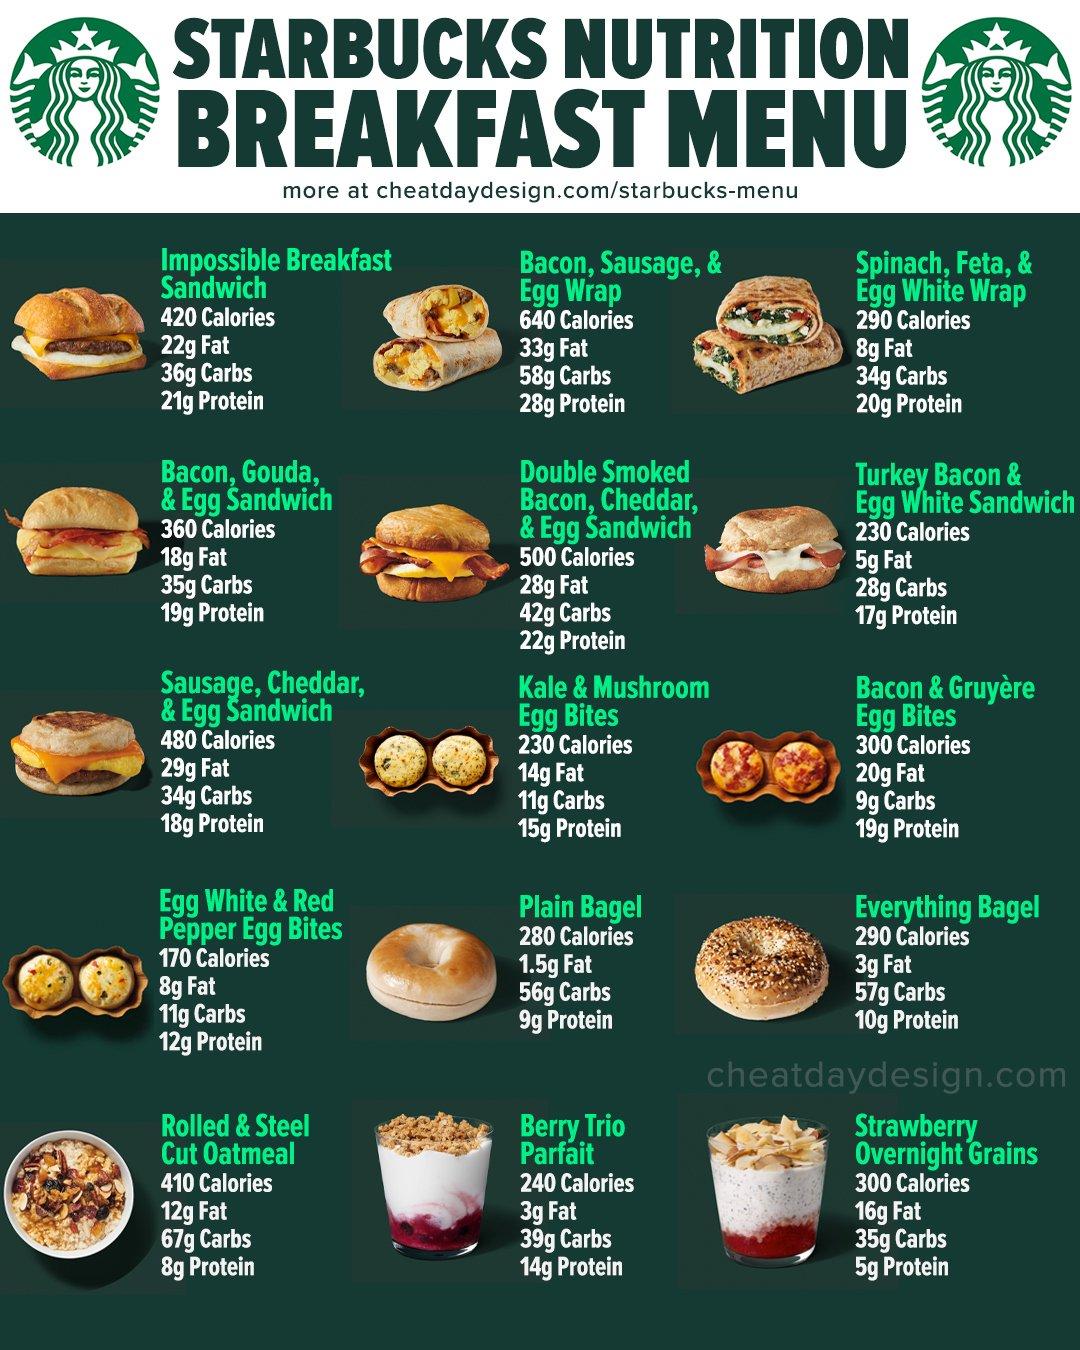 How Late Does Starbucks Serve Breakfast: Morning Guide!